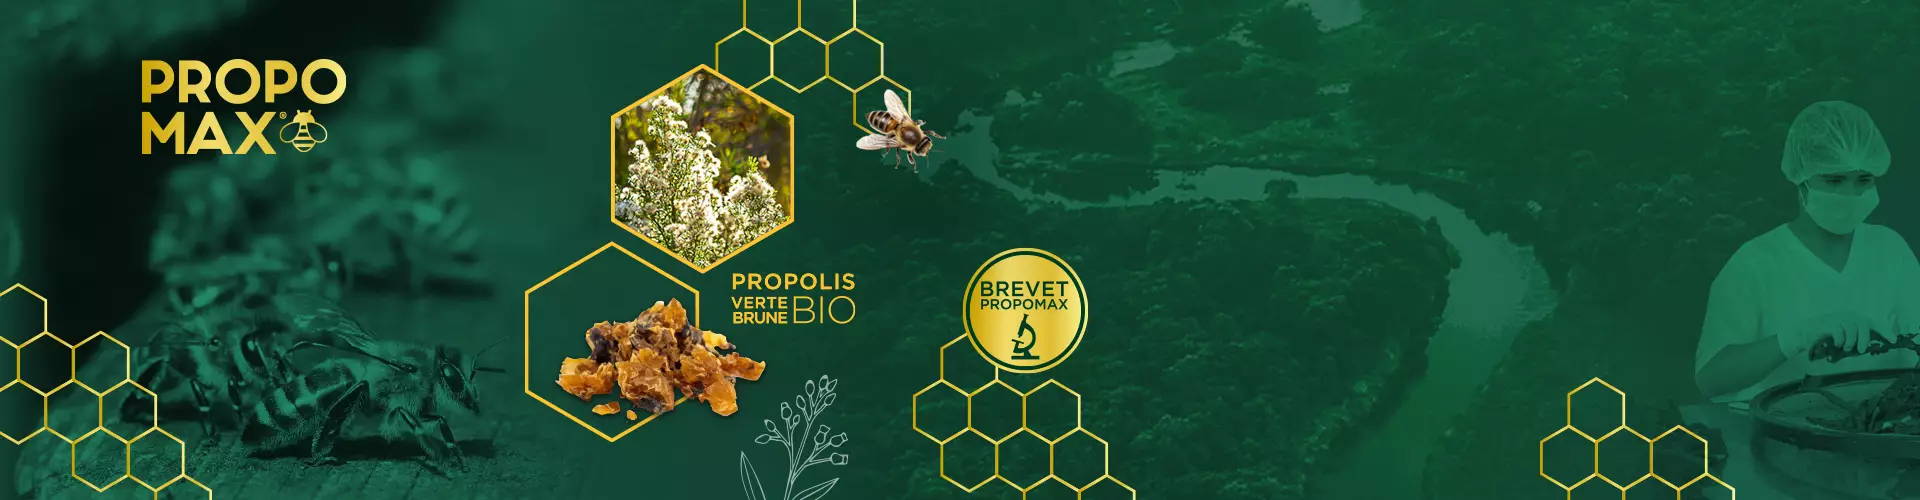 Propomax : propolis bio